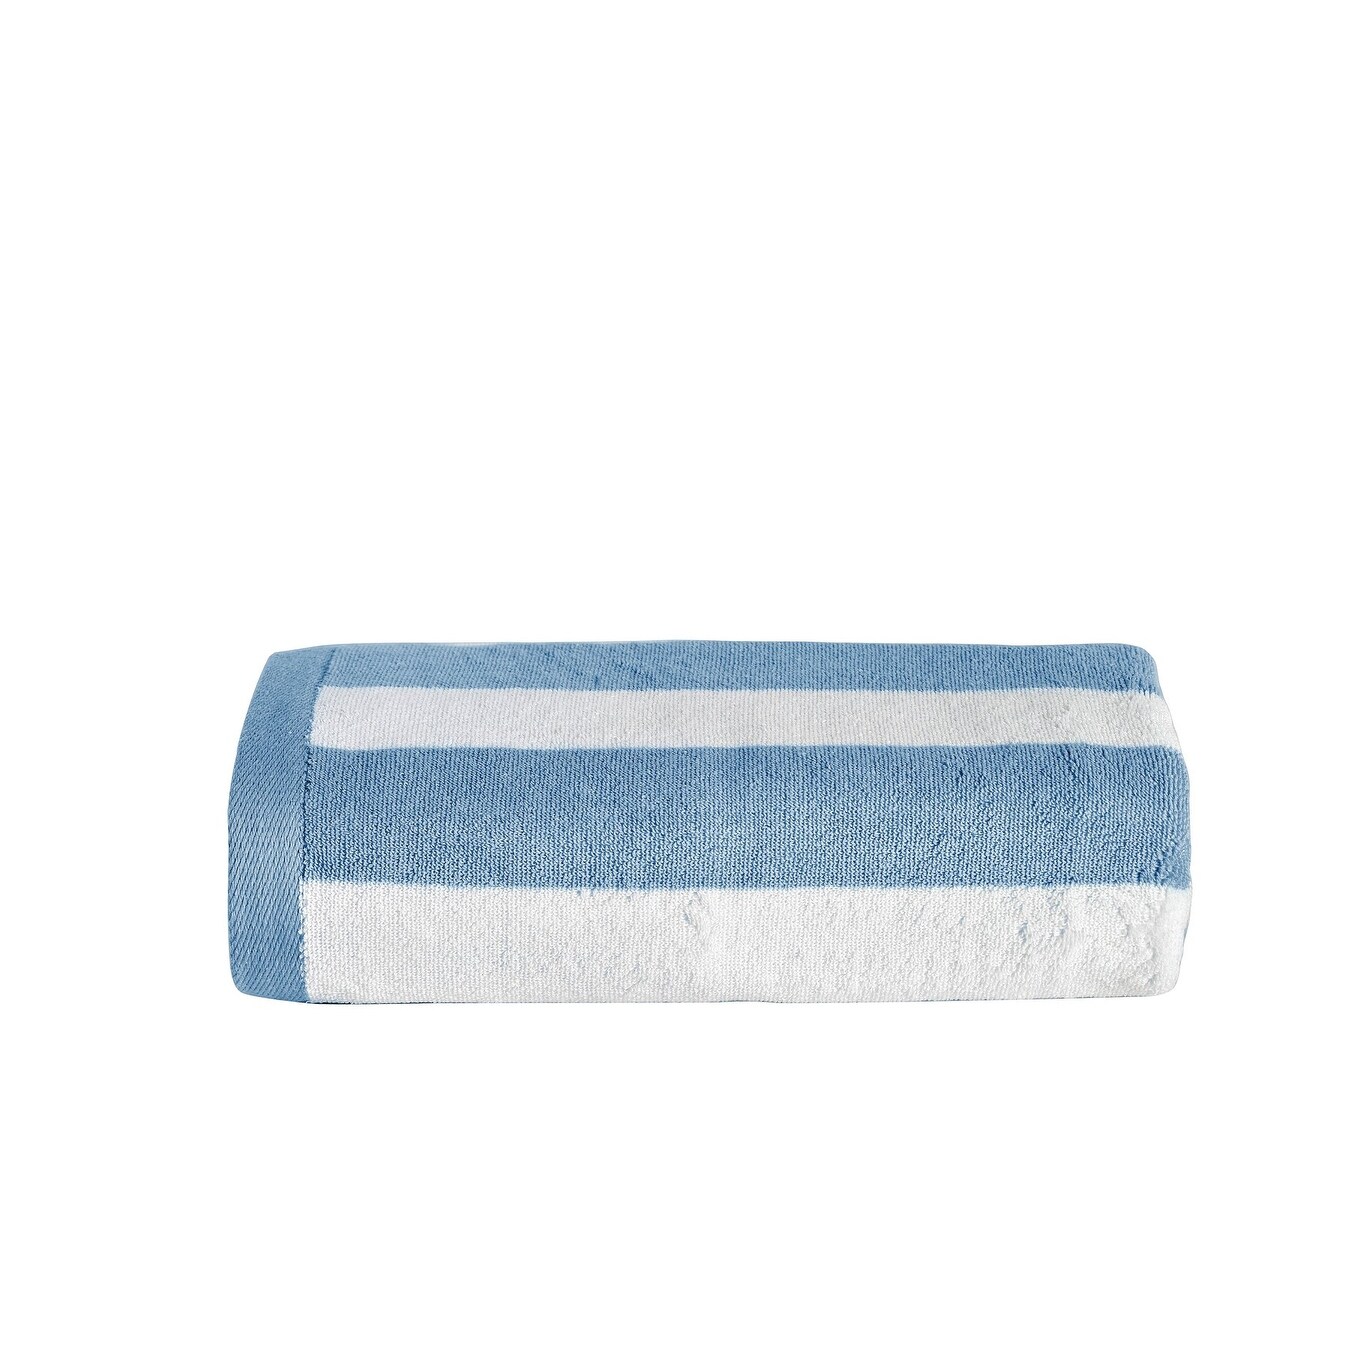 Blue-Yellow, 35x65 Inch Premium Quality 100% Cotton Turkish Cabana Thick Stripe Pool Beach Towels 2-Pack